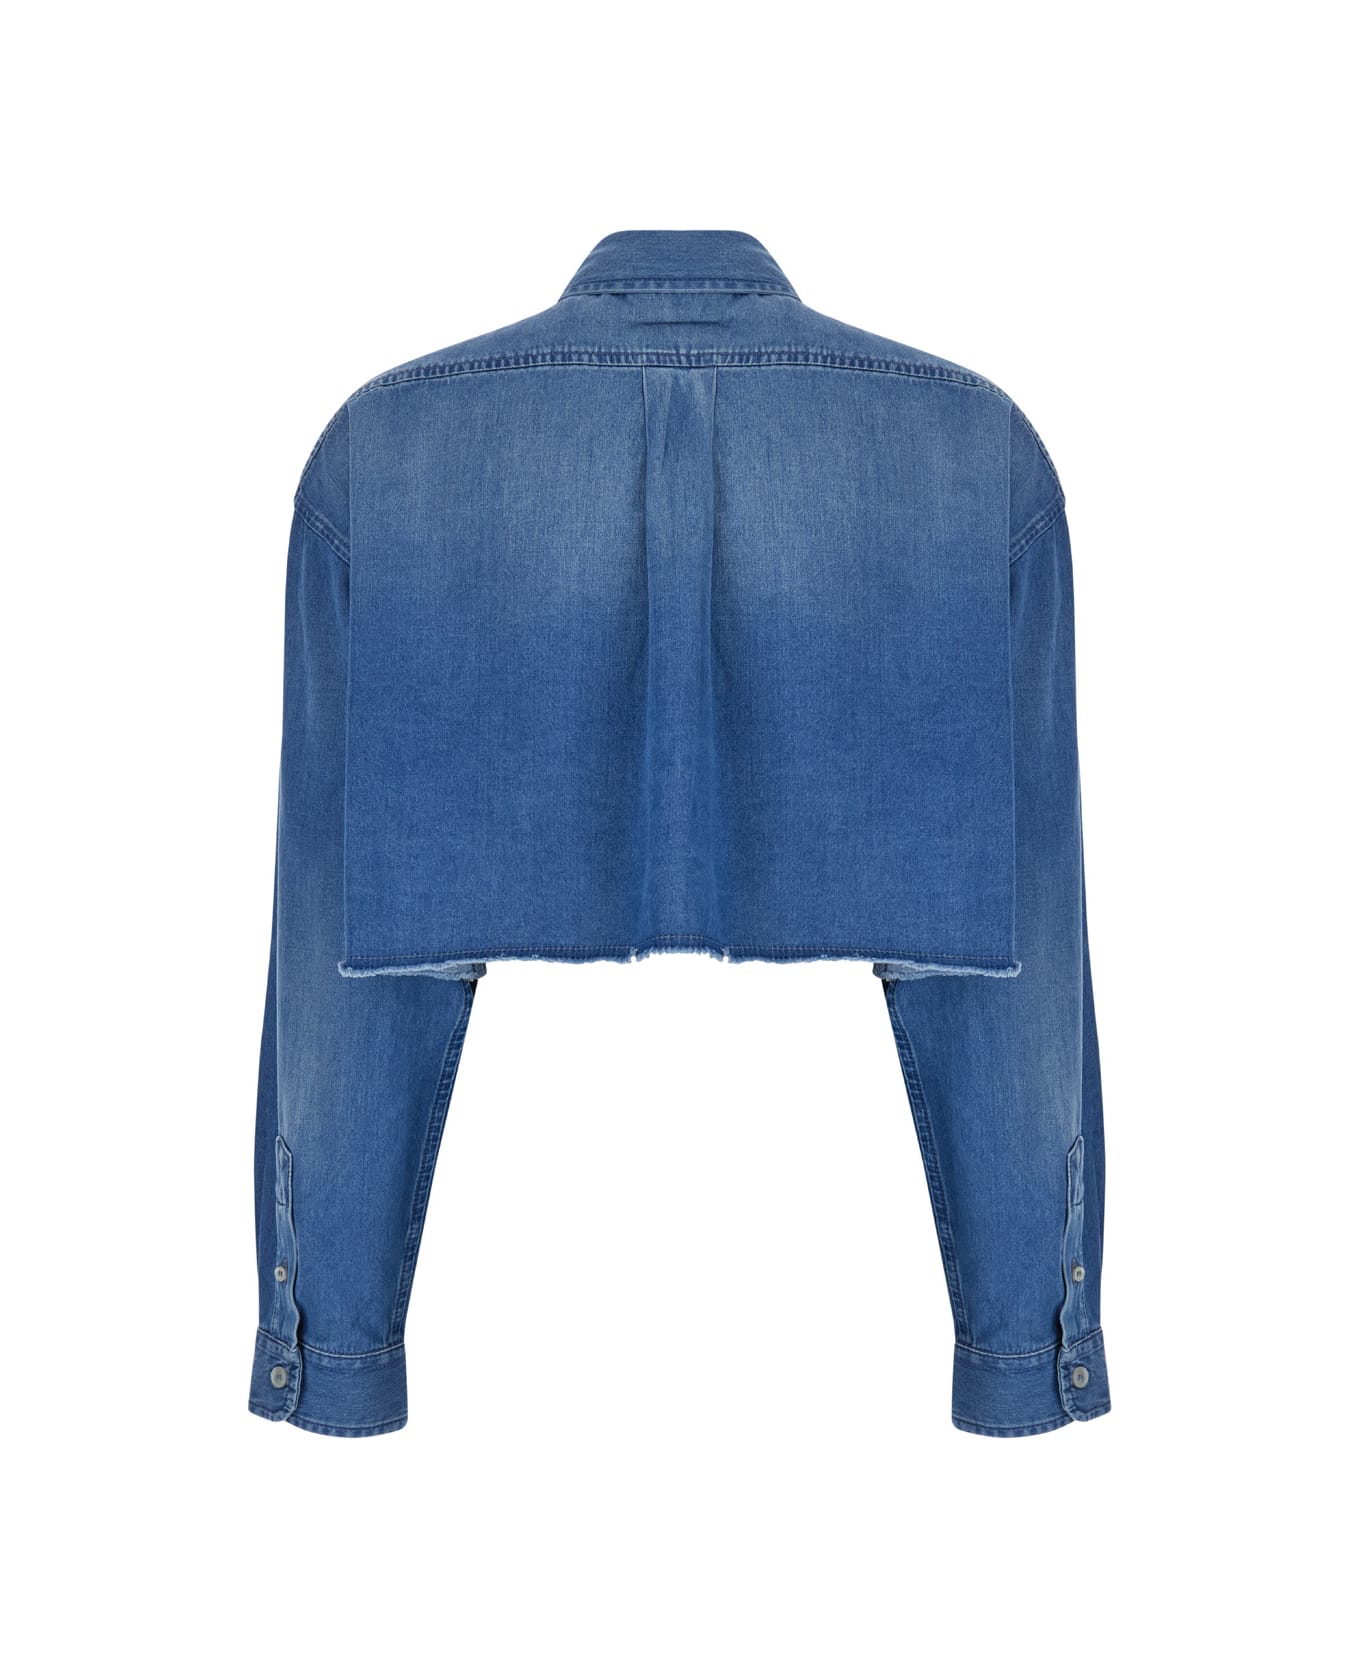 Givenchy Denim Shirt - Blu